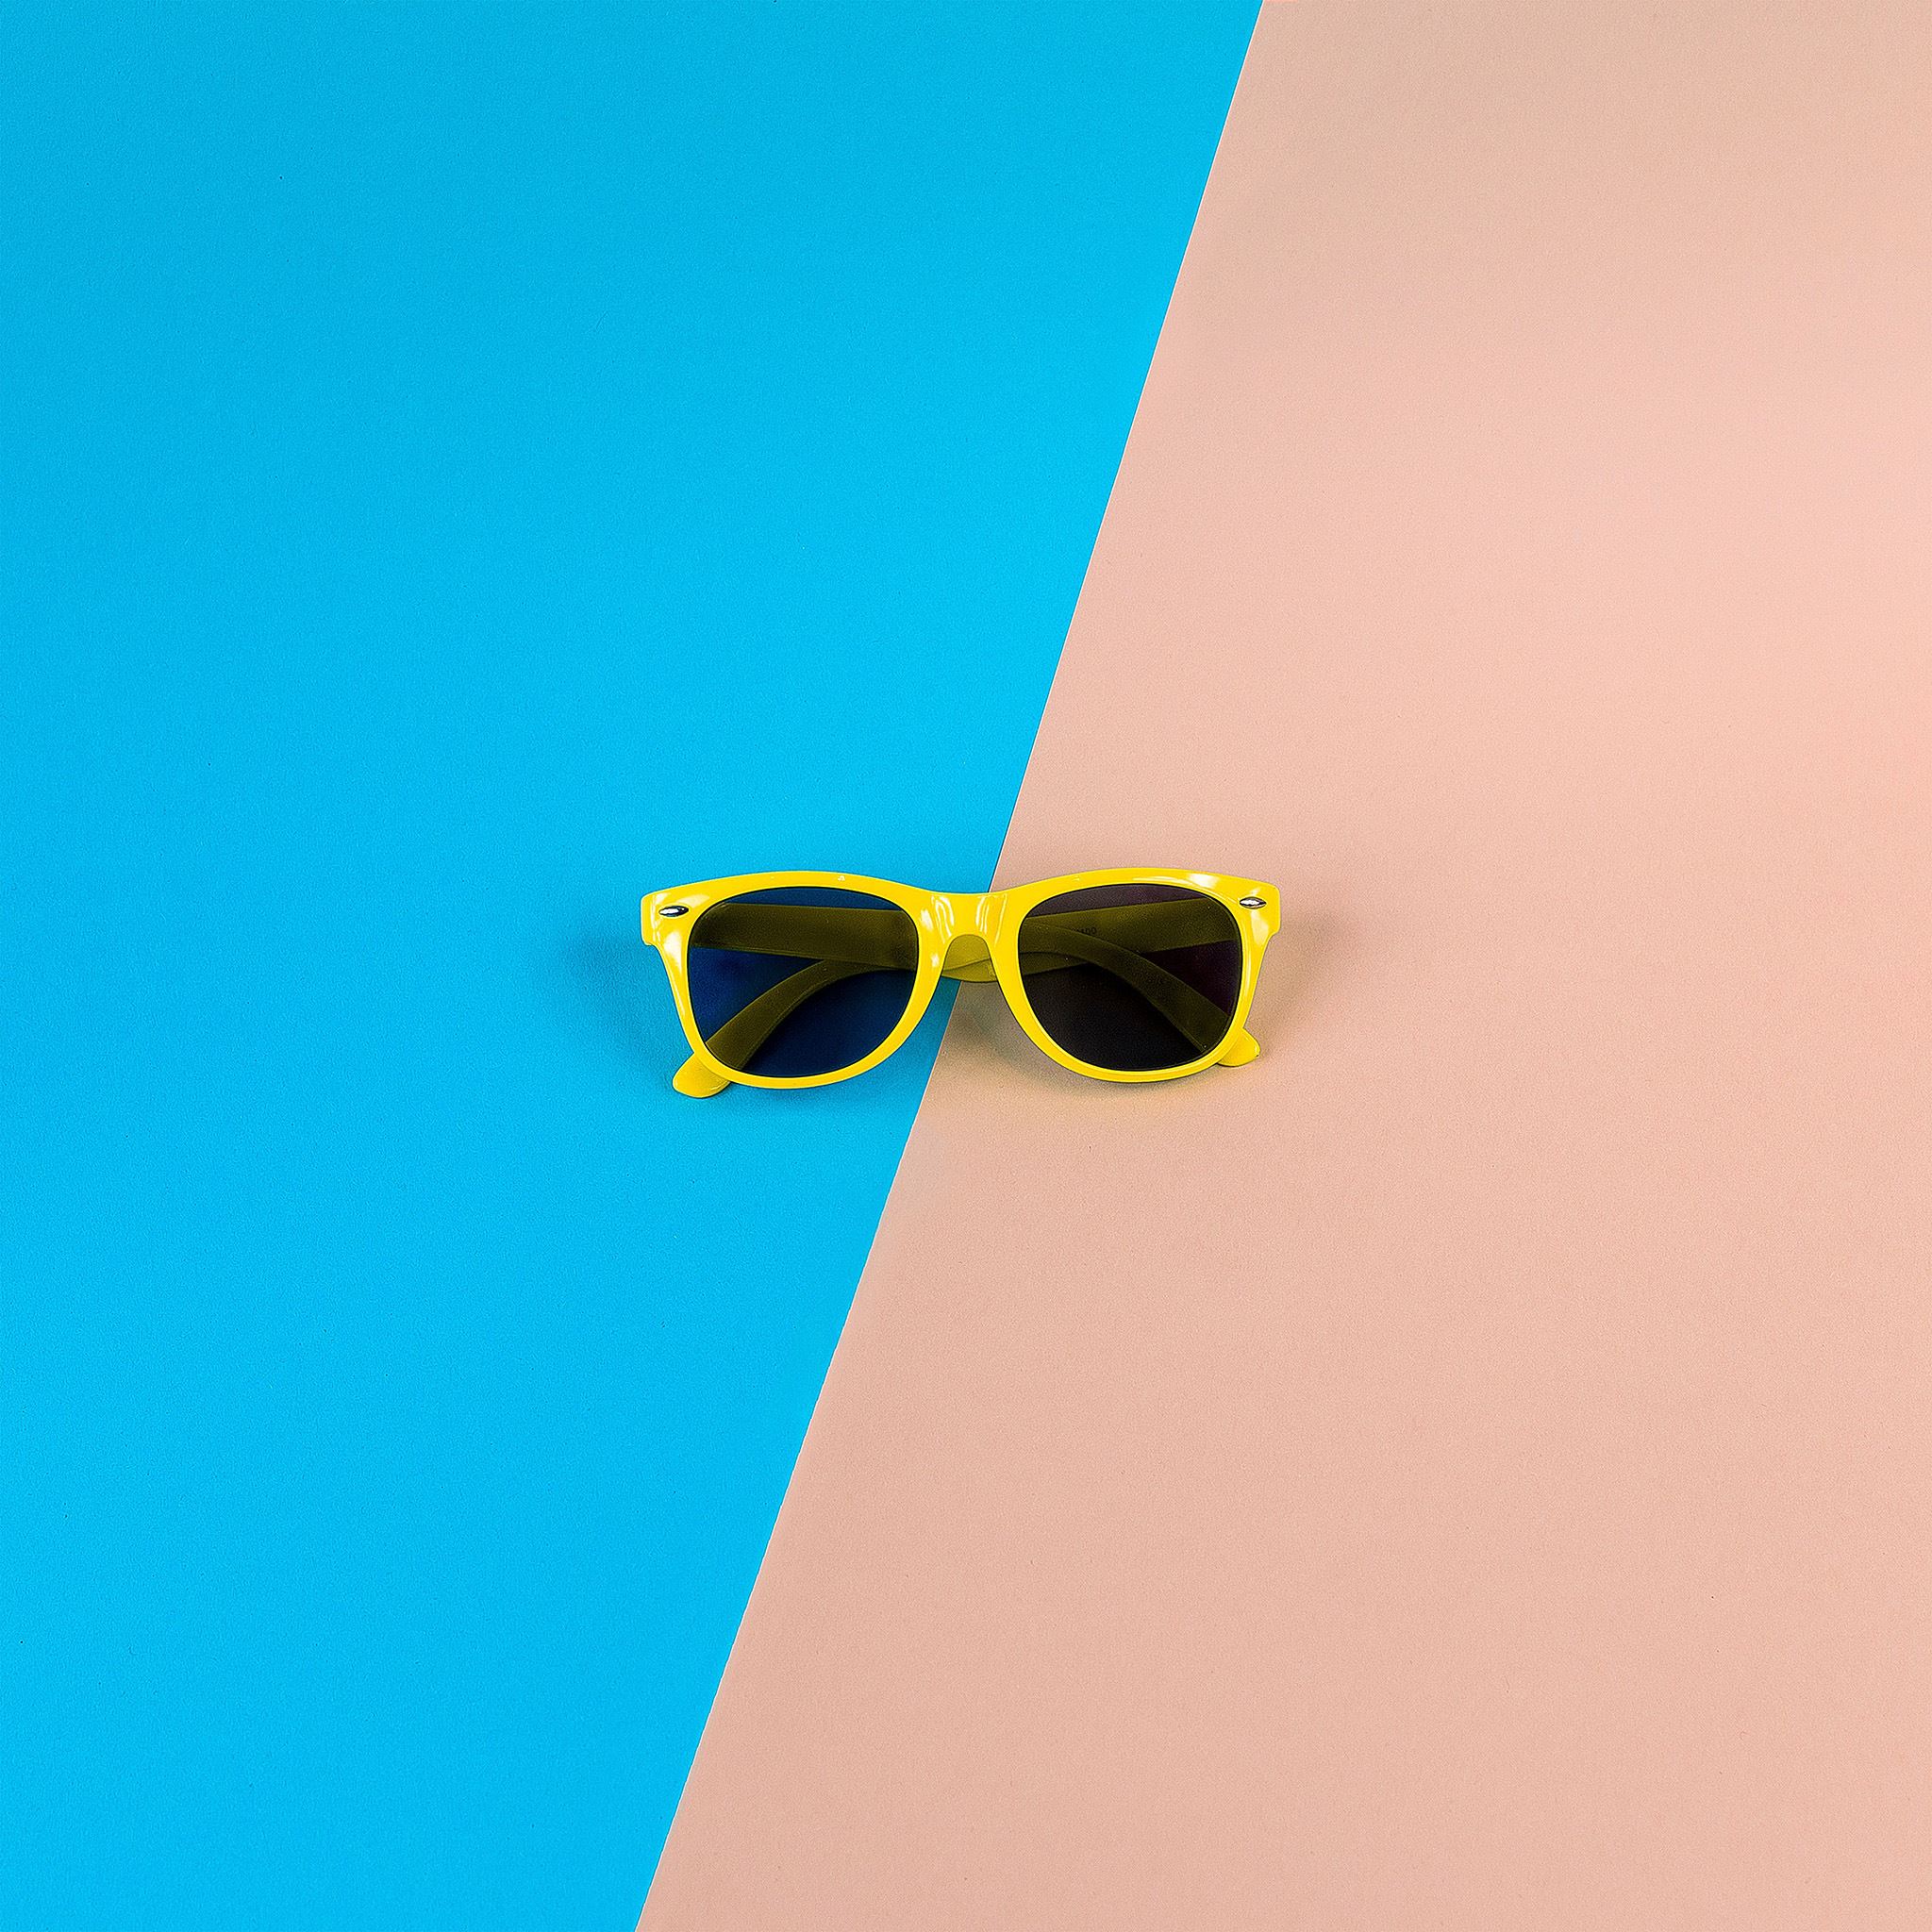 Minimal Glasses Pink Blue Yellow iPad Air Wallpaper Free Download